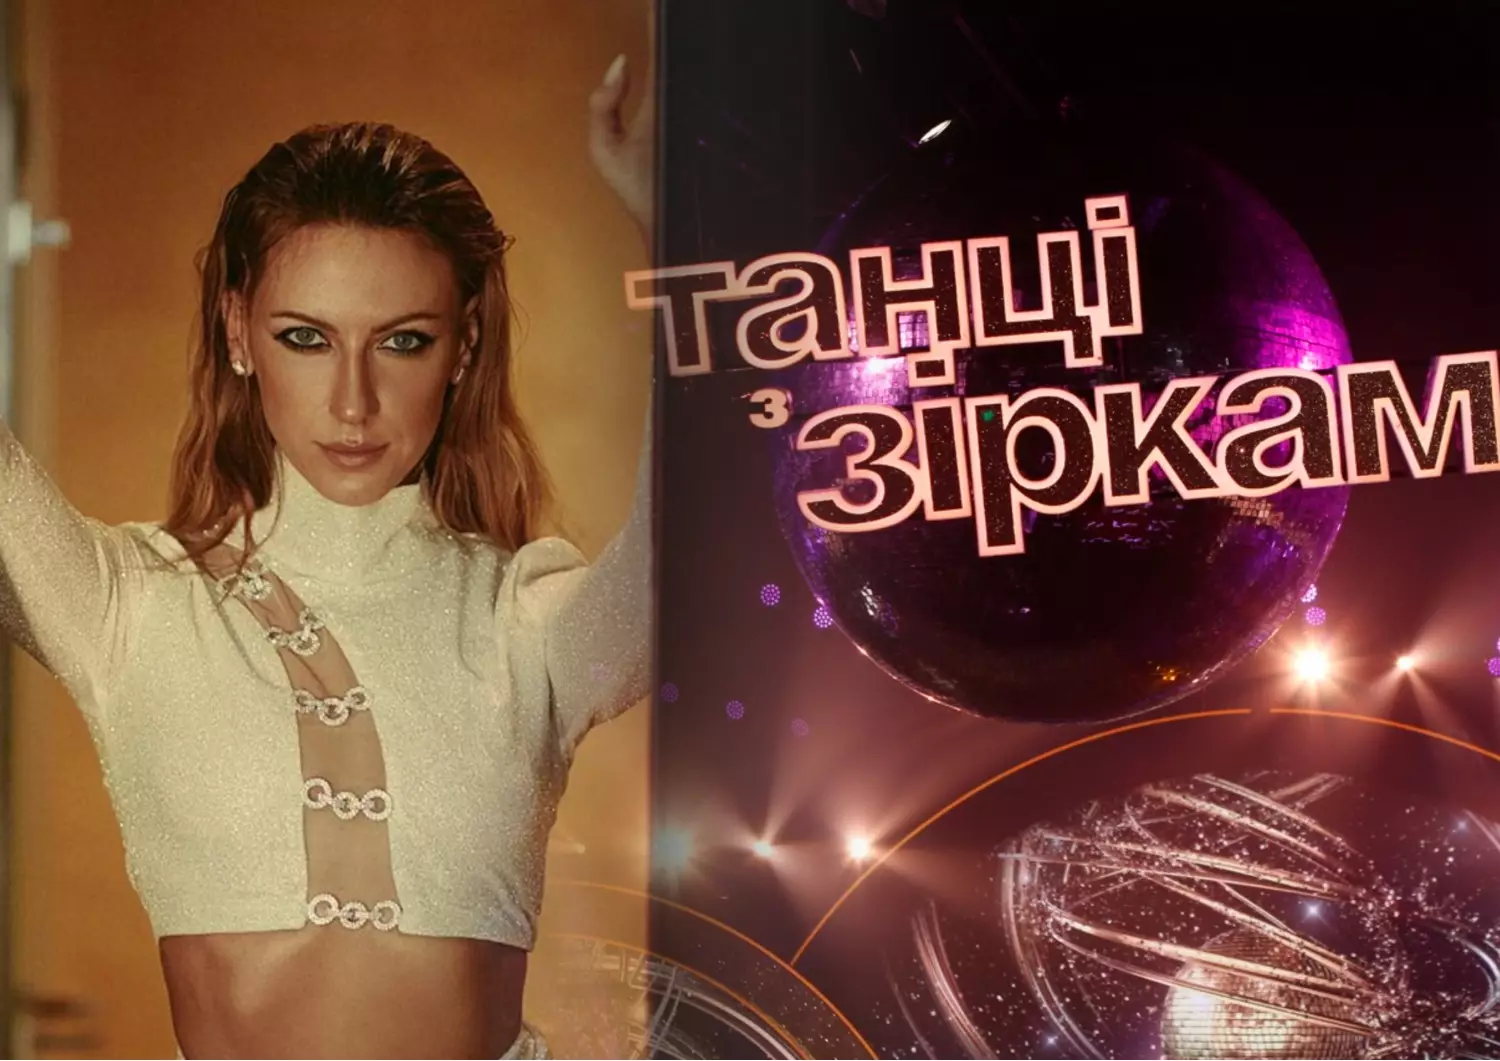 Леся Никитюк займет кресло жюри в четвертом эфире "Танців зірками"